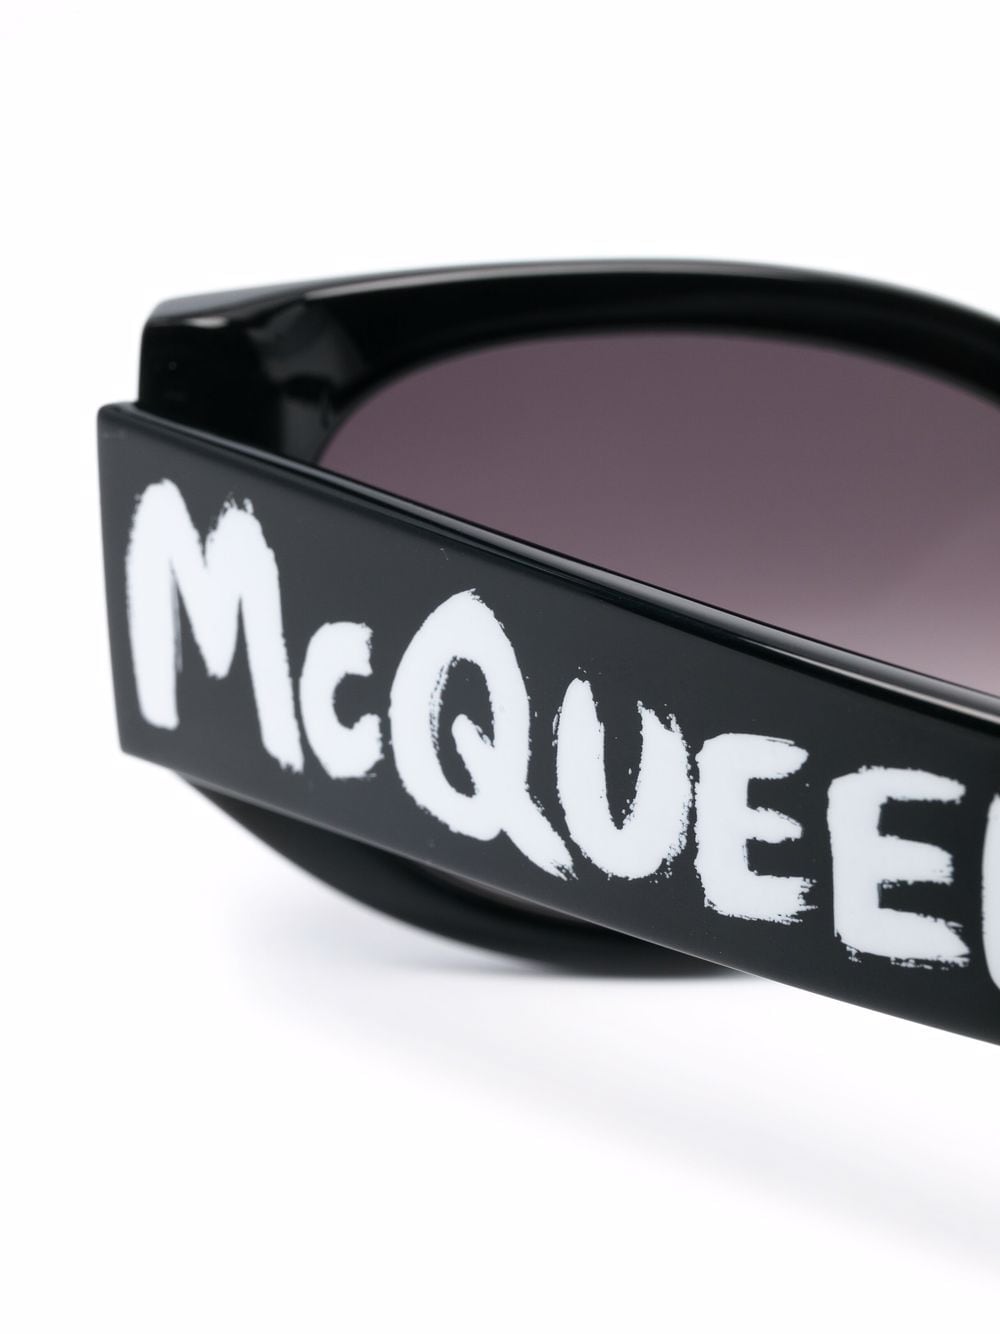 Black/grey acetate oval-frame logo-print sunglasses